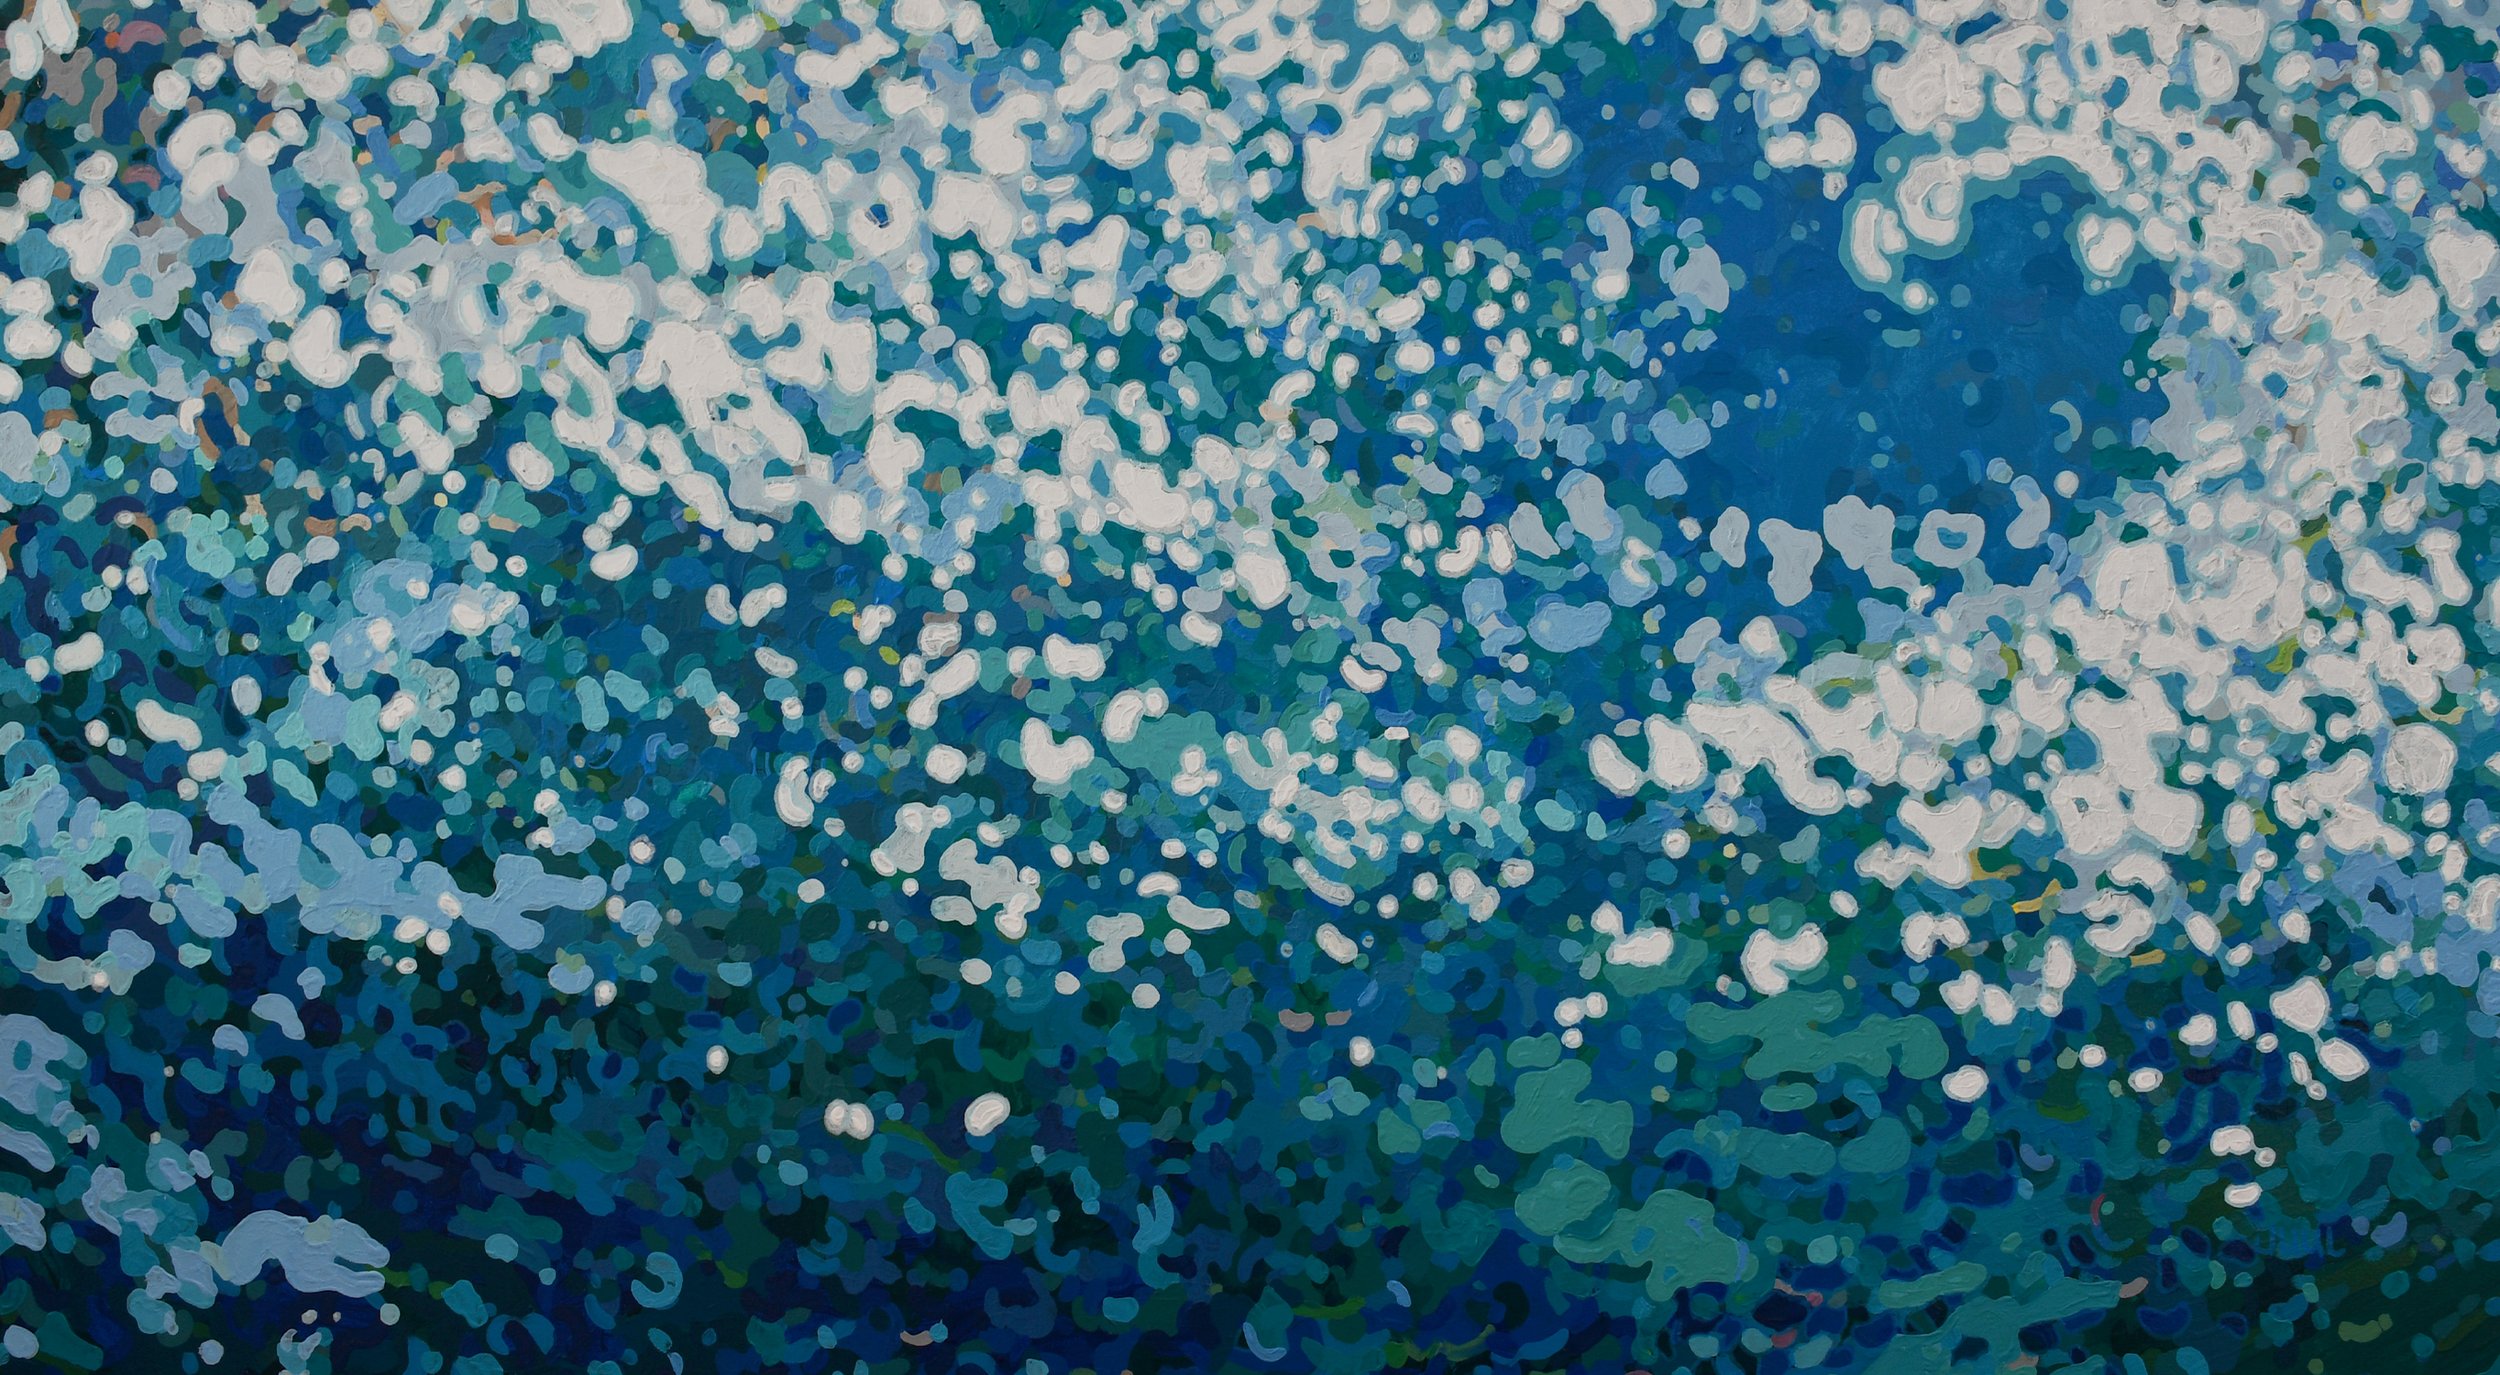 MARGARET JUUL - Upward Morning - Acrylic on Canvas - 30x60 inches